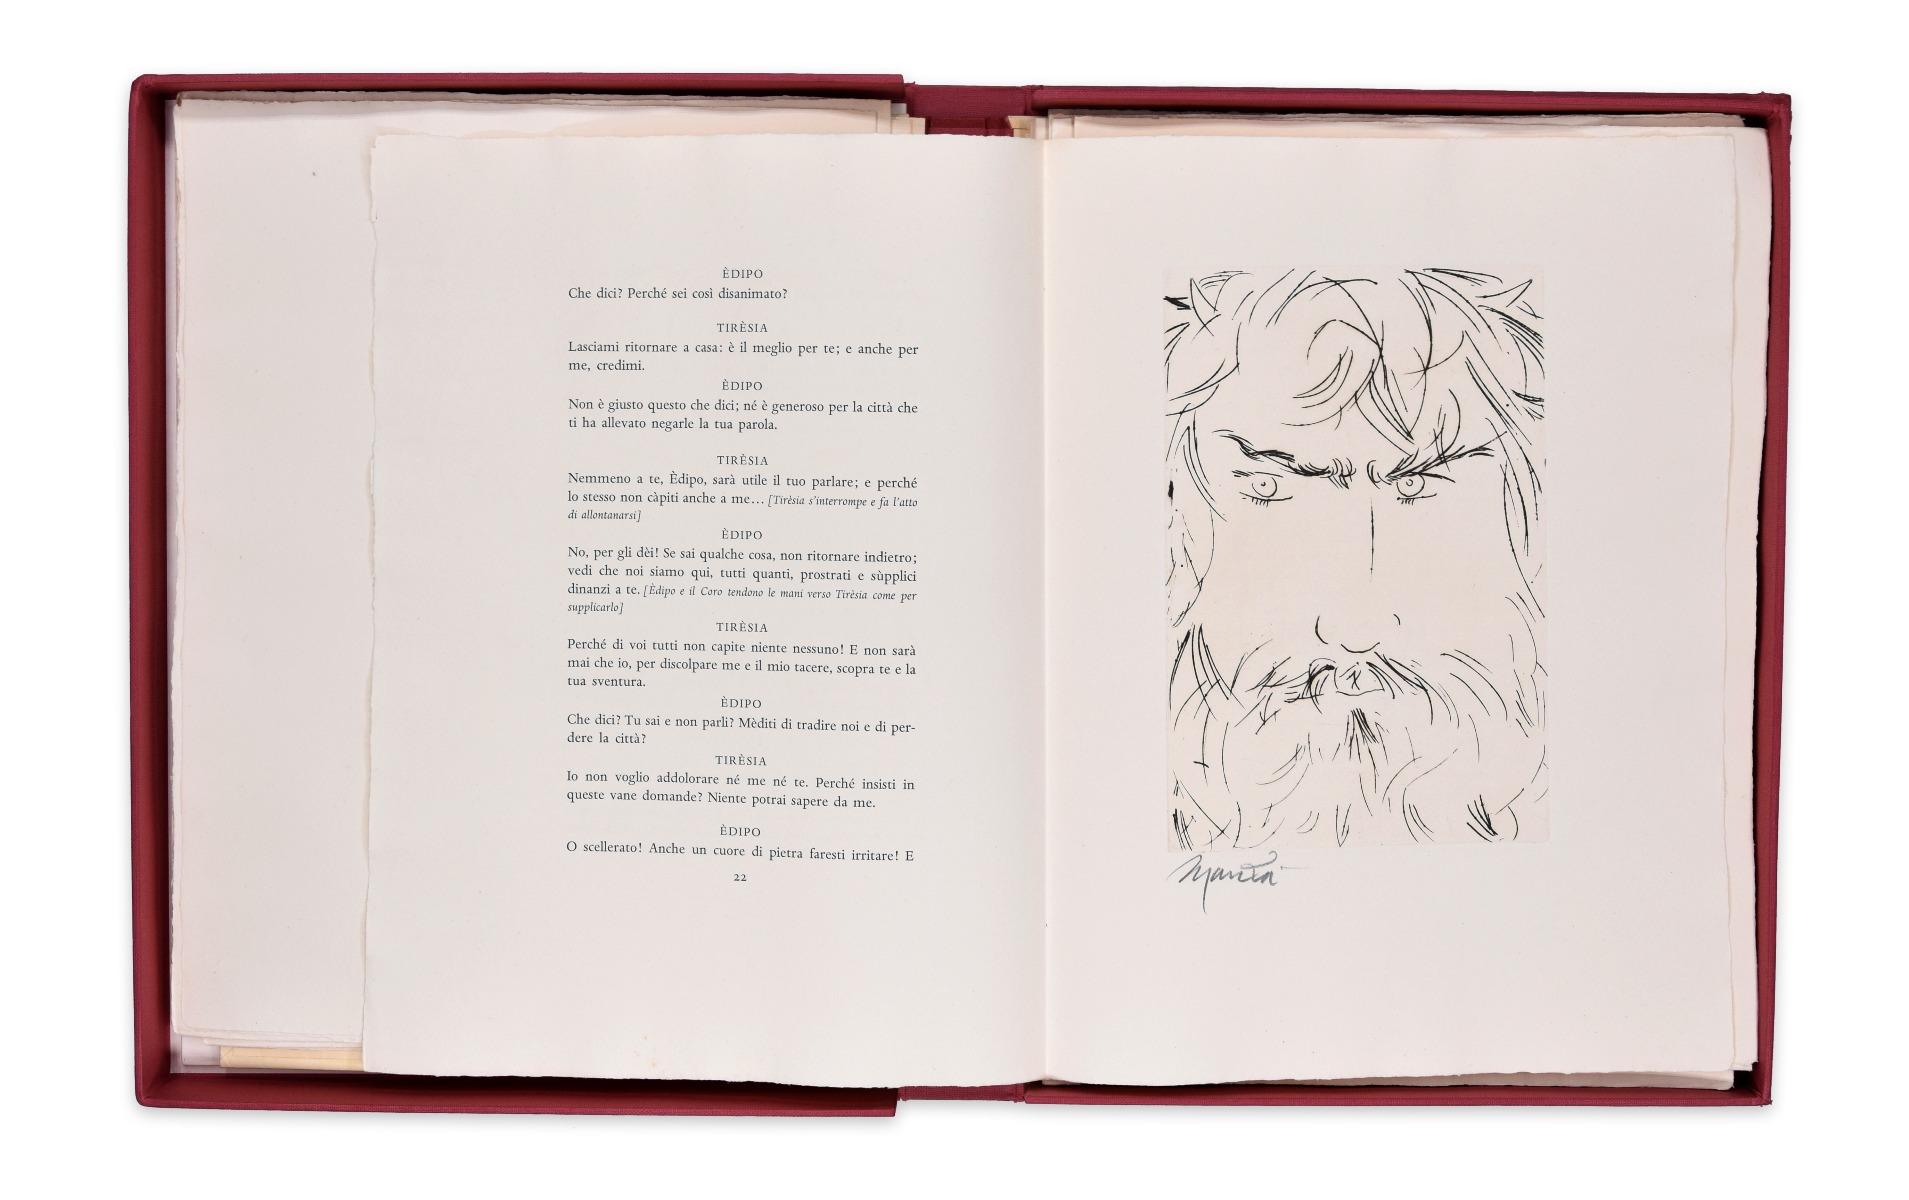 King Oedipus - Rare Book Illustrated by Giacomo Manzù - 1968